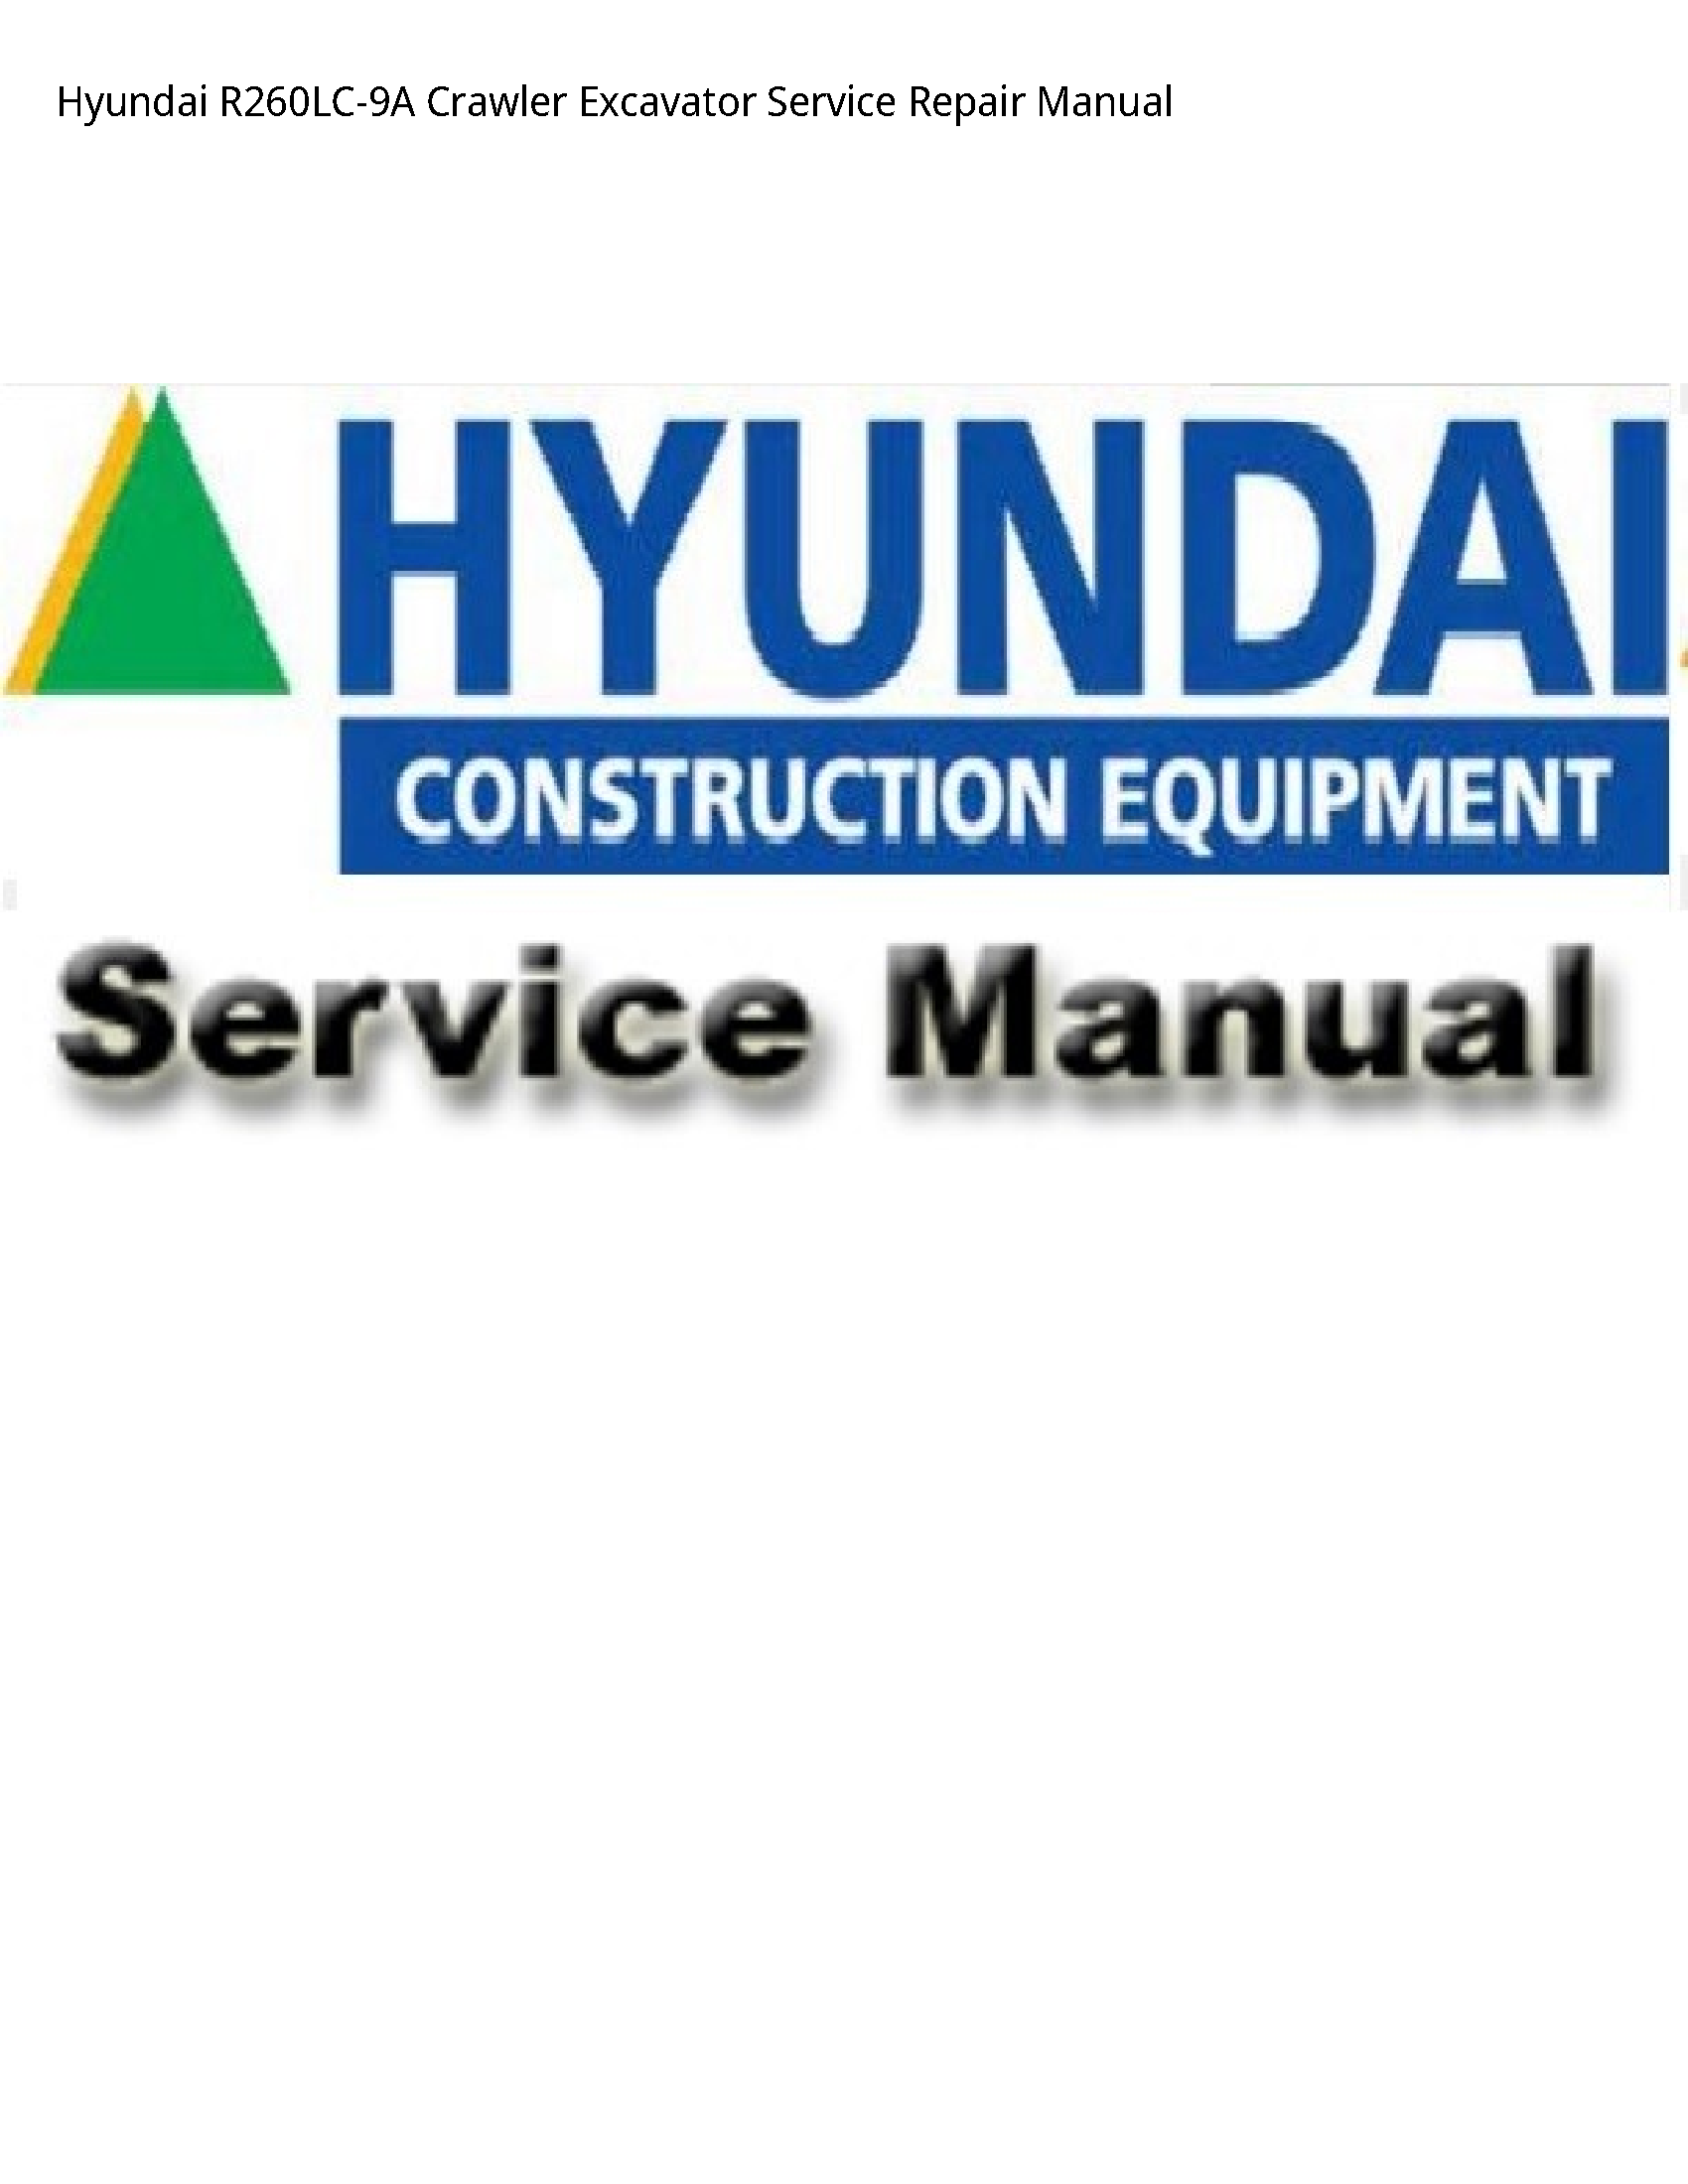 Hyundai R260LC-9A Crawler Excavator manual